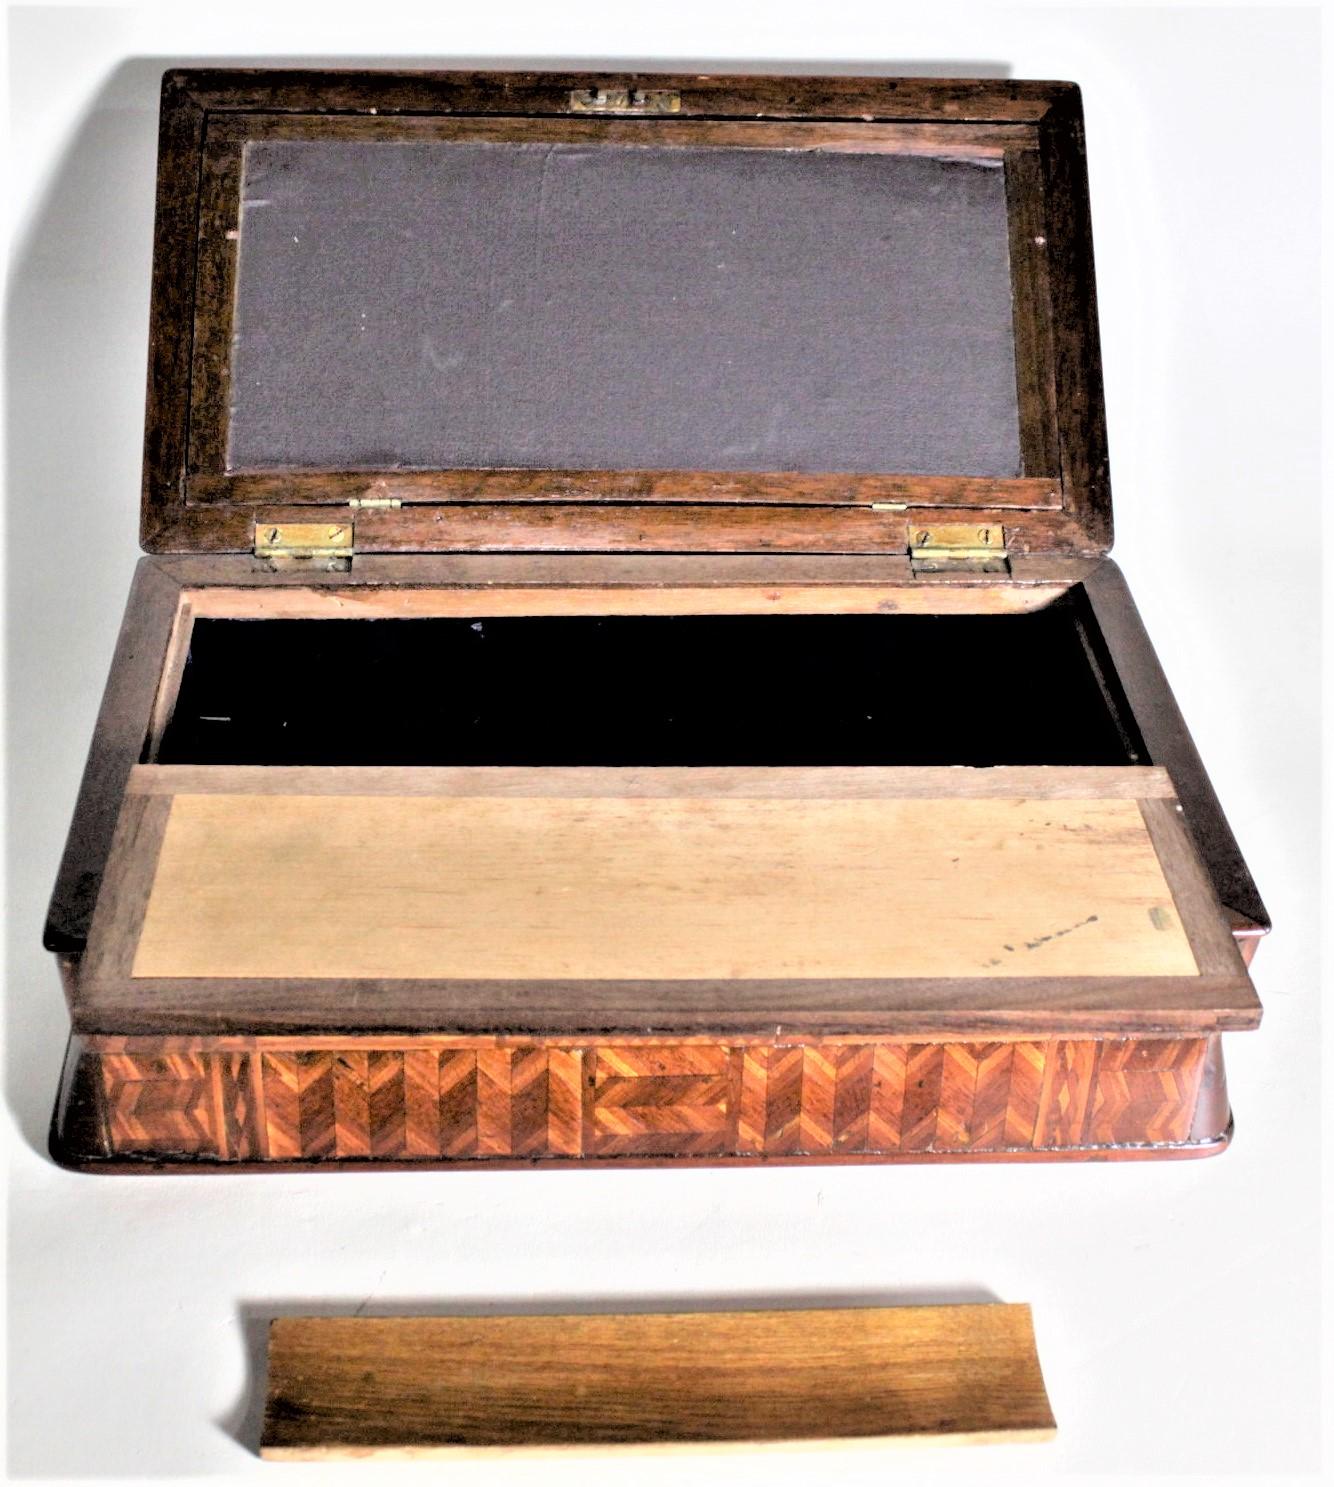 Superb Antique Folk Art Parquetry Casket Styled Writing Box or Lap Desk For Sale 5